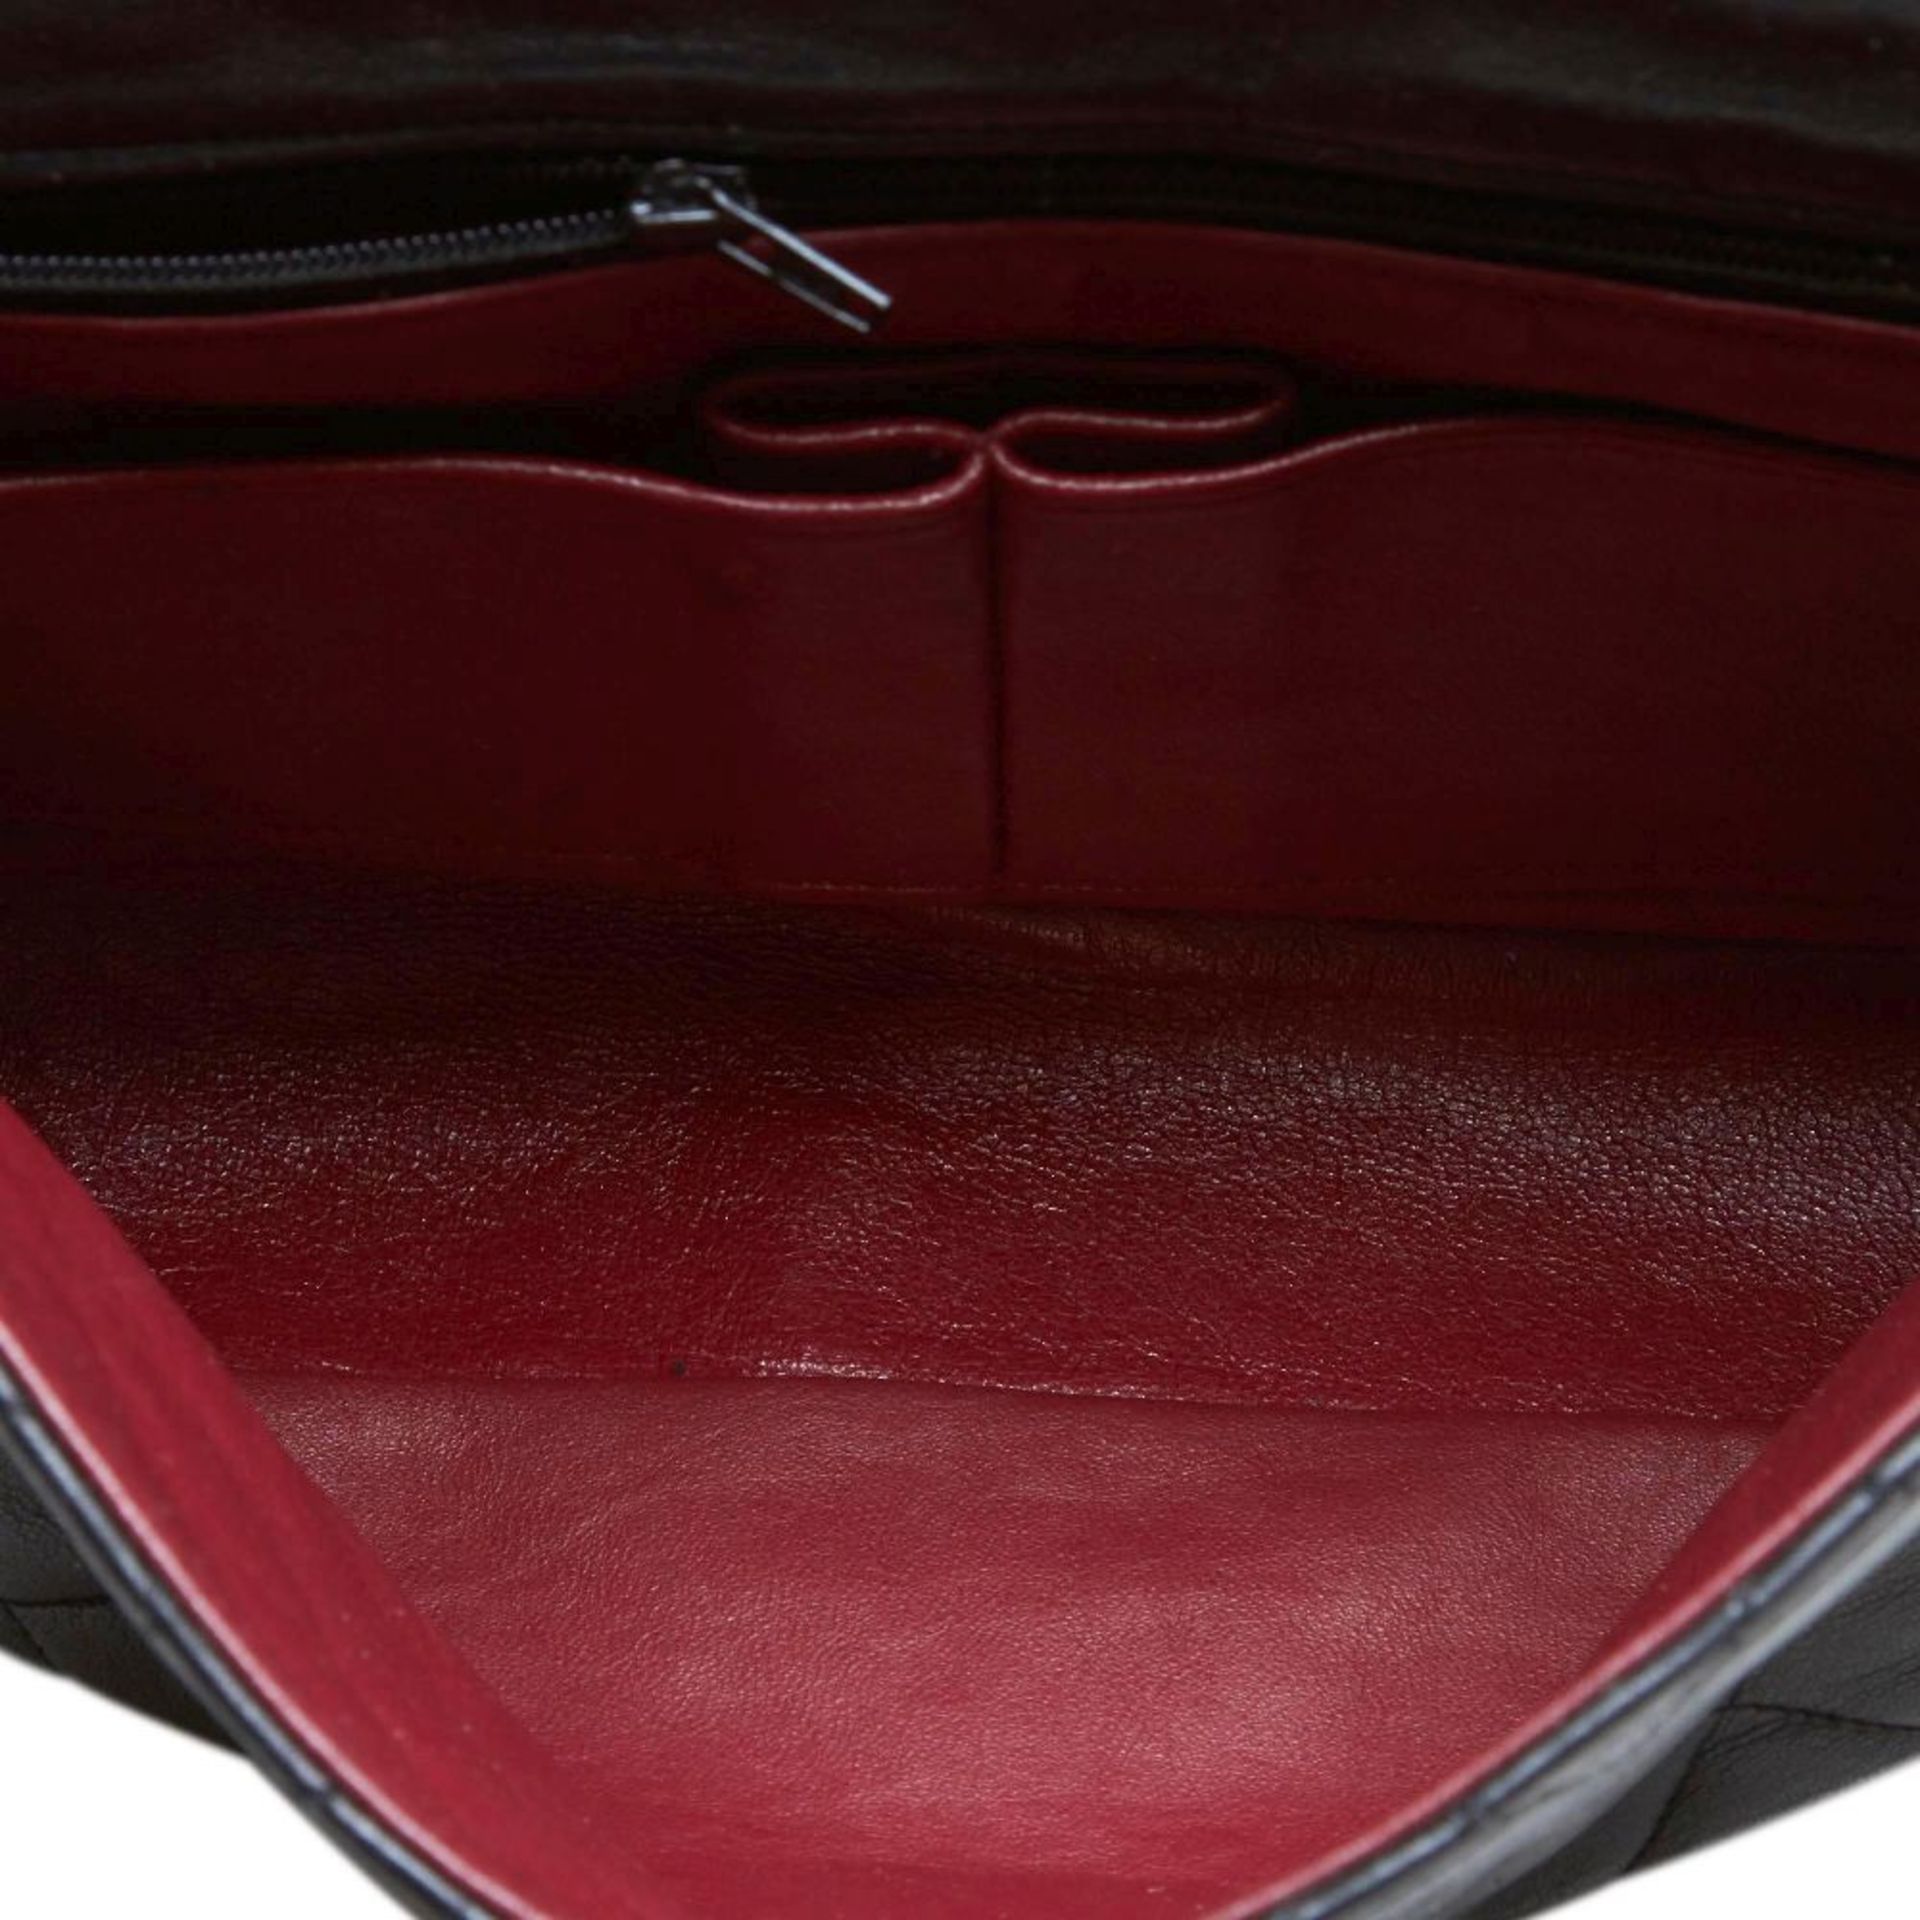 A Chanel matelassé leather flap bag,featuring a lambskin leather body, exterior back pocket, gold- - Bild 5 aus 5